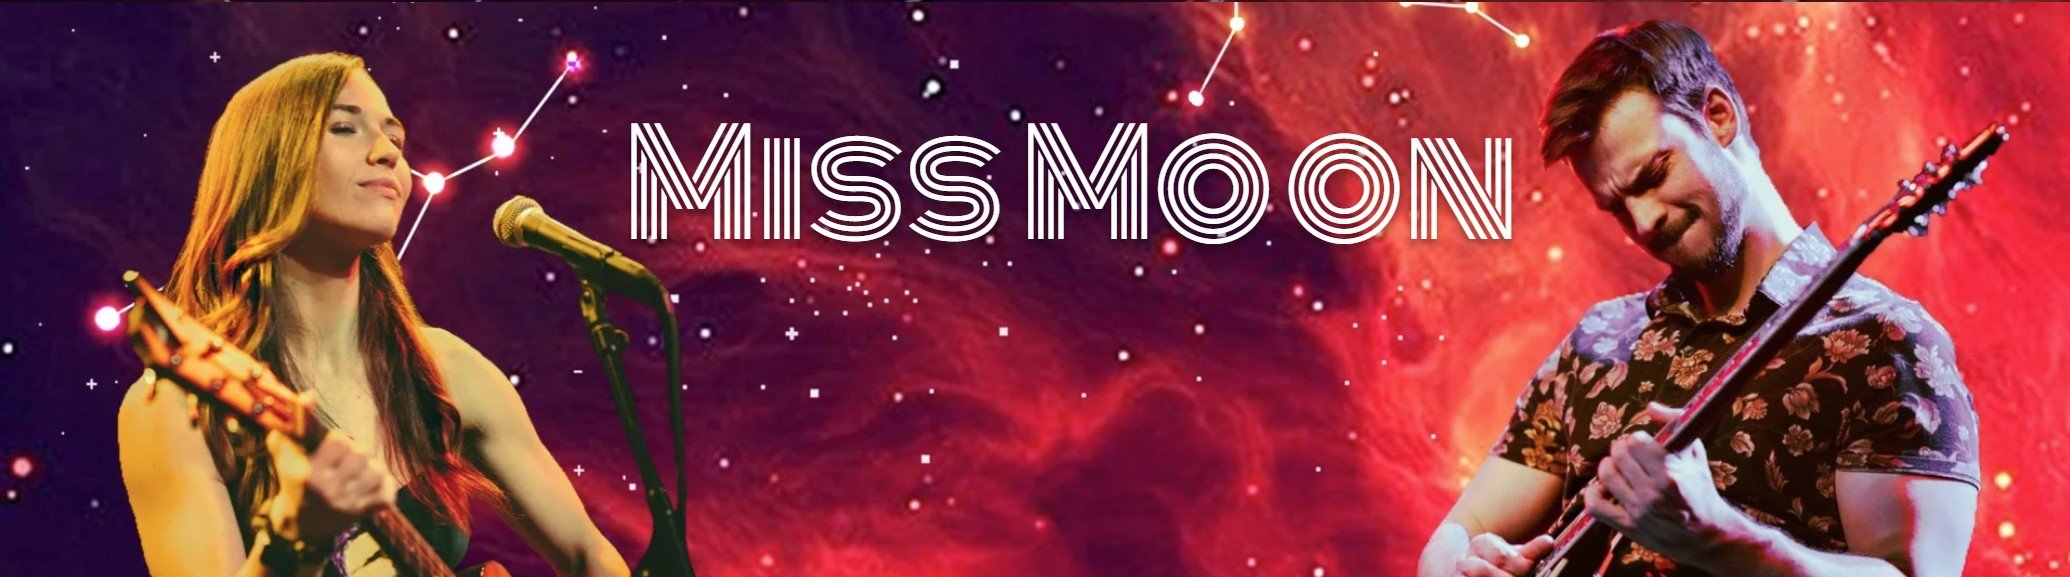 Miss Moon RIsing.jpg